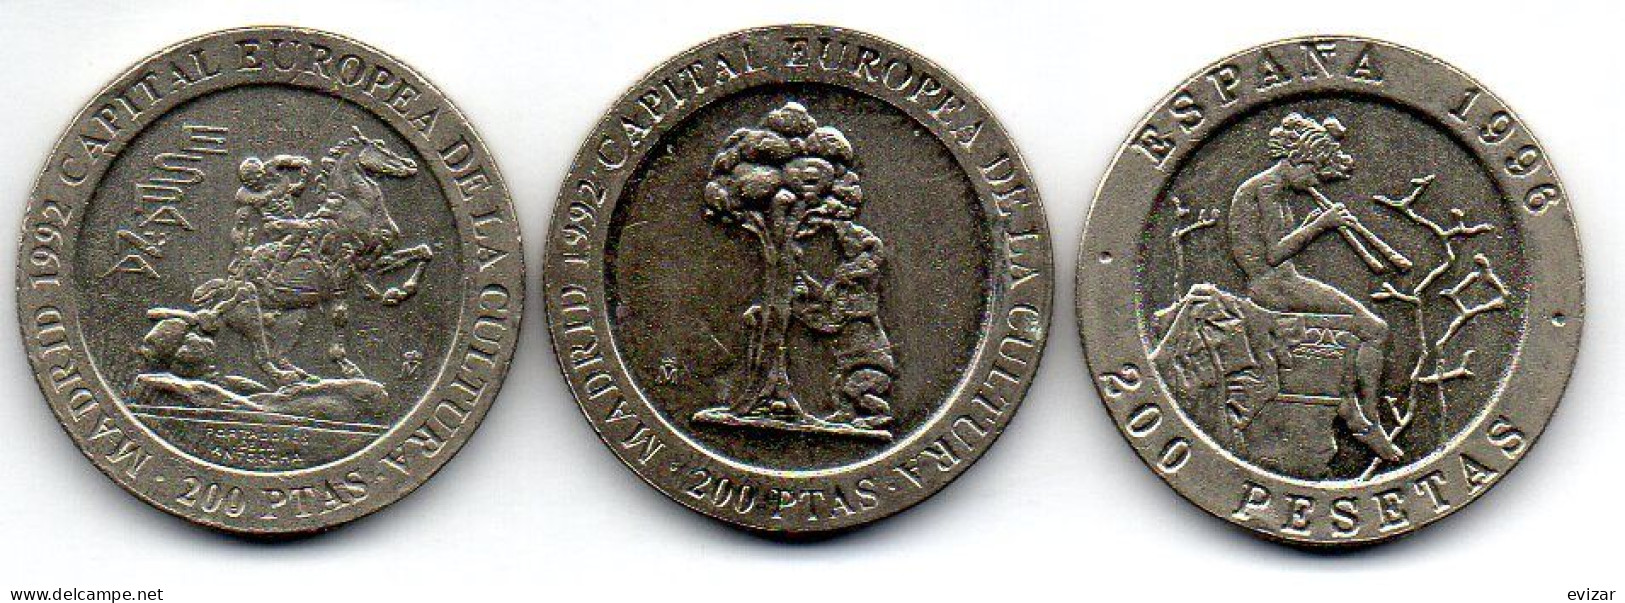 SPAIN, Set Of Three Coins 200 Pesetas, Copper-Nickel, Year 1992, 1996, KM # 909, 910, 965 - 200 Peseta